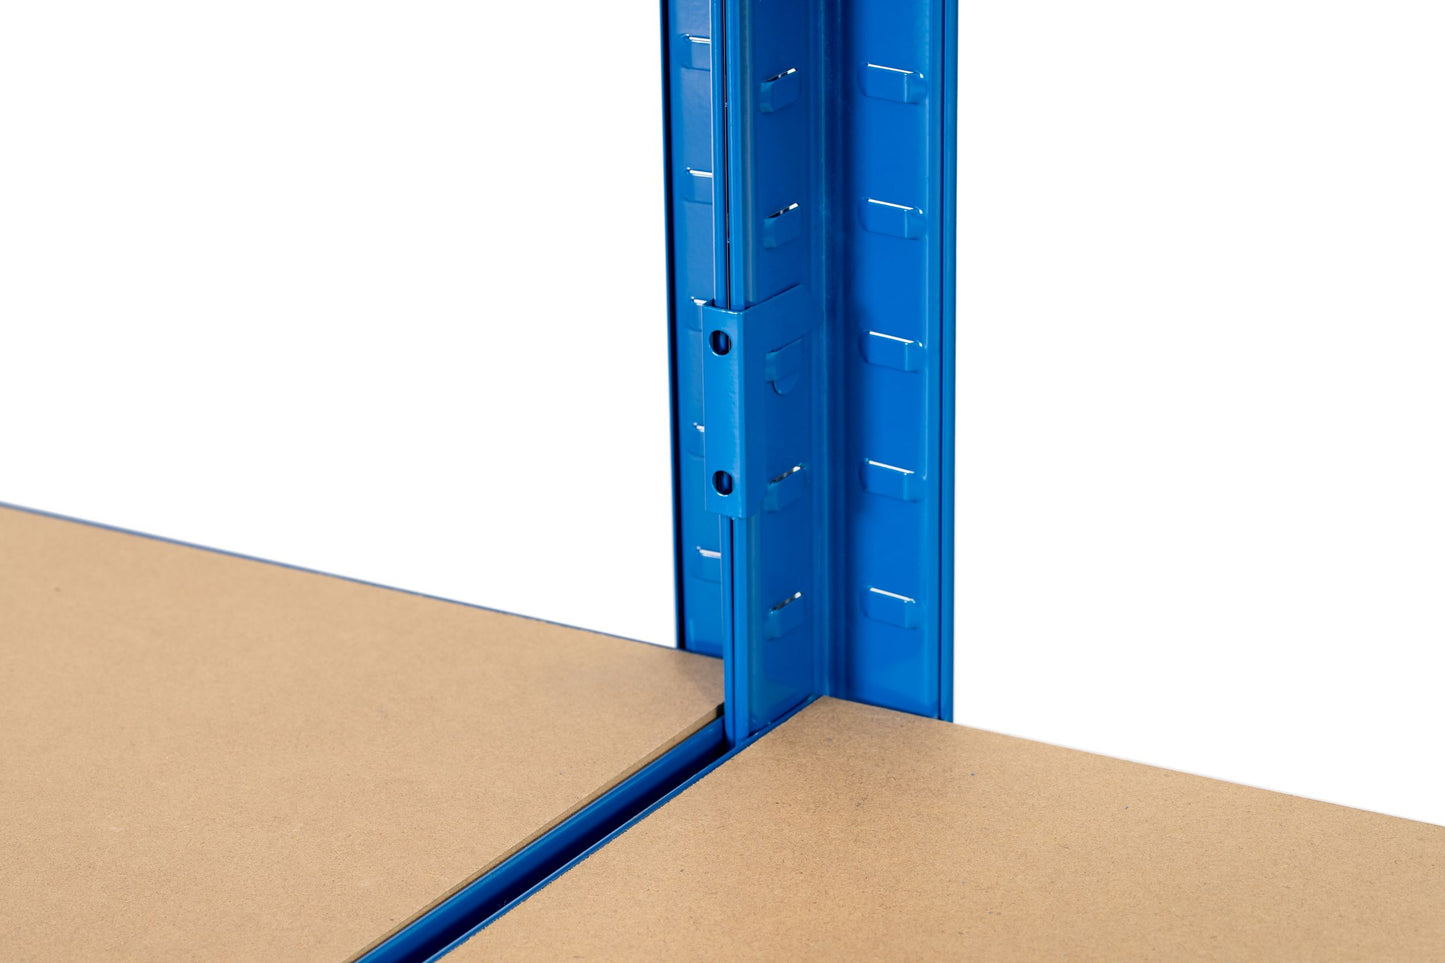 150 x 75 x 30cm | Blue | 5 Tier Boltless Heavy Duty Garage Shelving Unit | 1000kg Load Weight